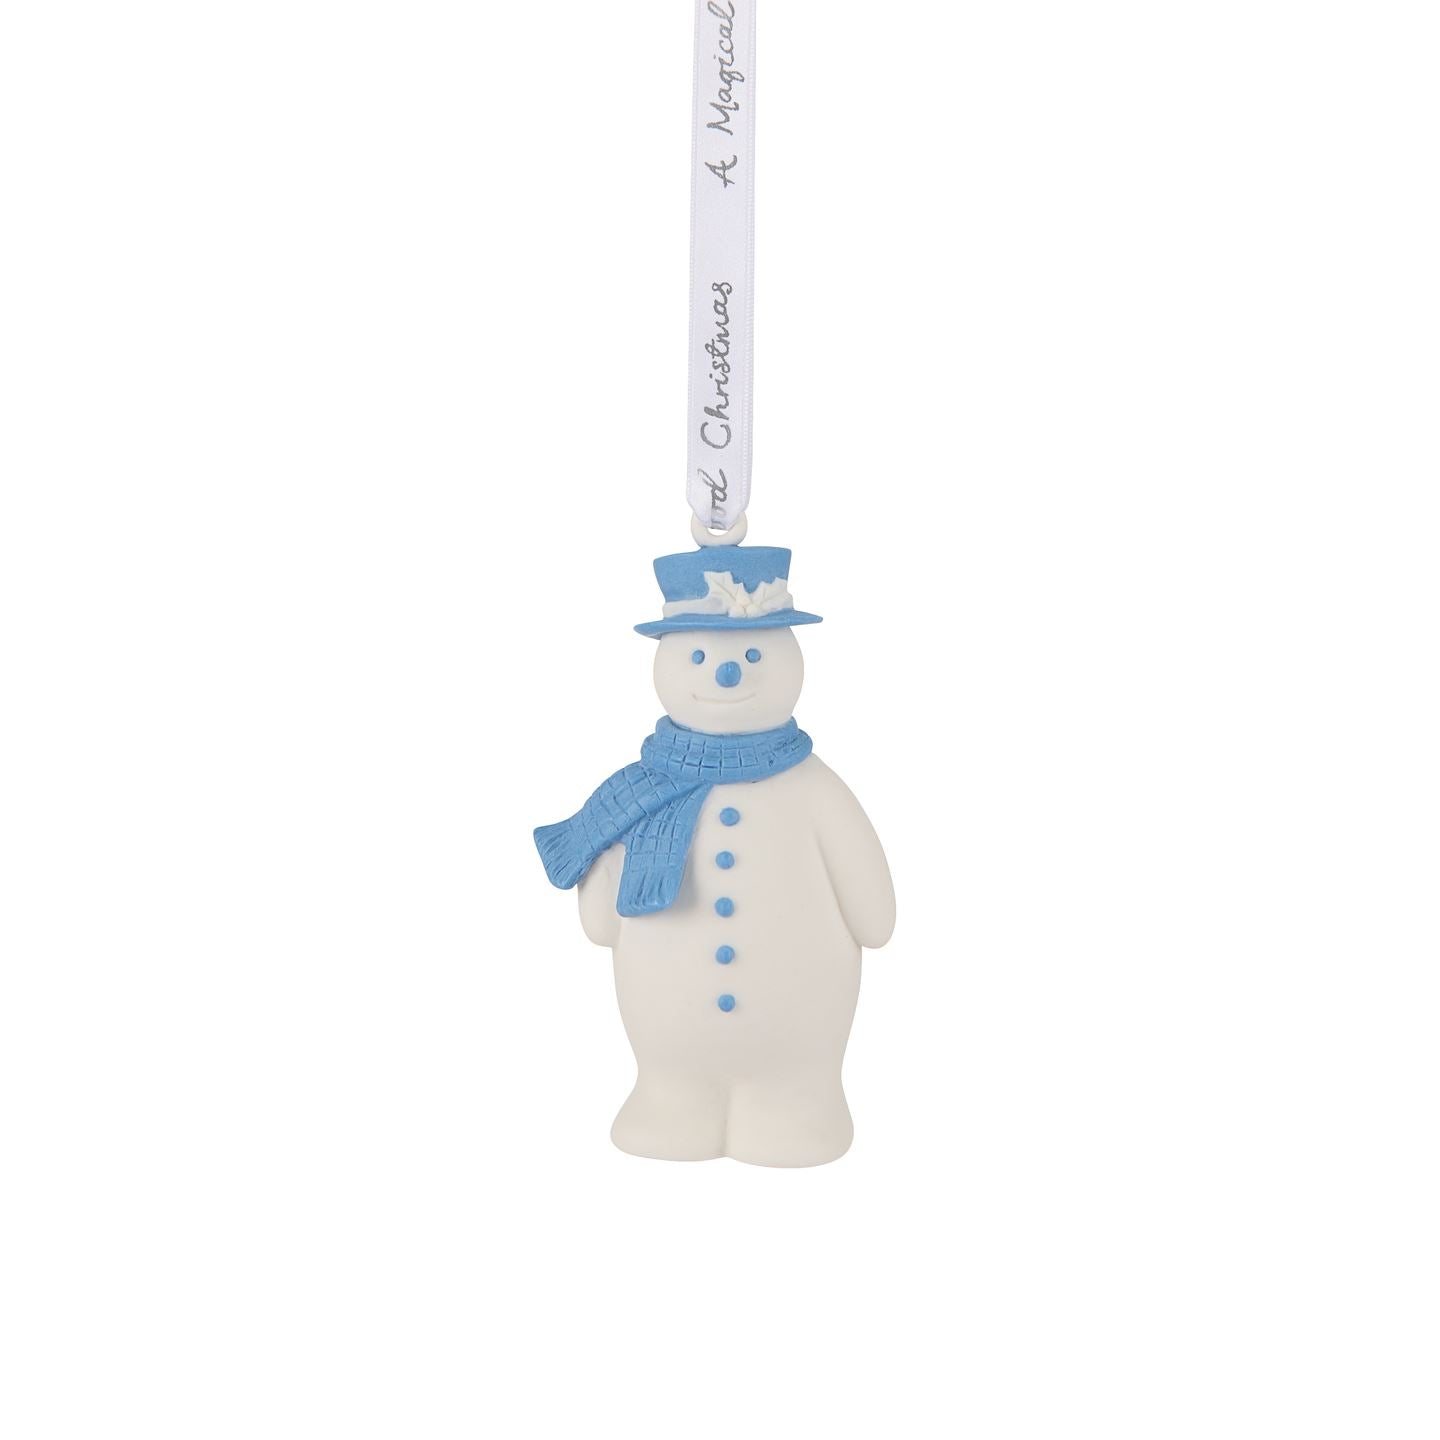 Wedgwood Snowman Ornament 4"Tall - Royal Gift